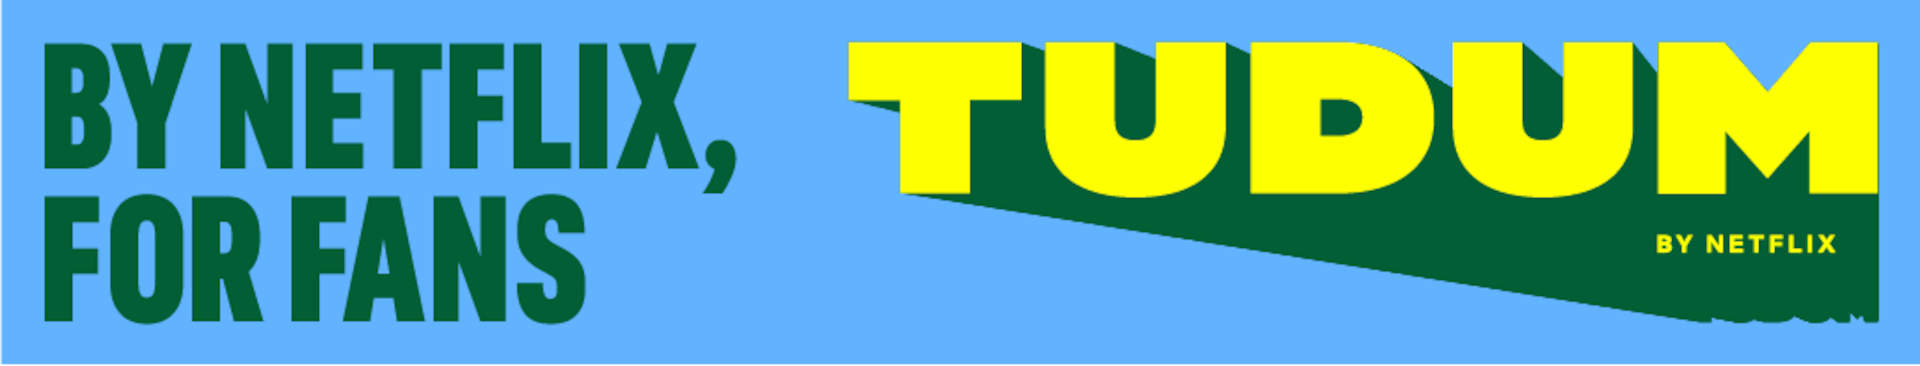 Tudum Brand Campaign. Banner that reads 'By Netflix, for fans. Tudum by Netflix'